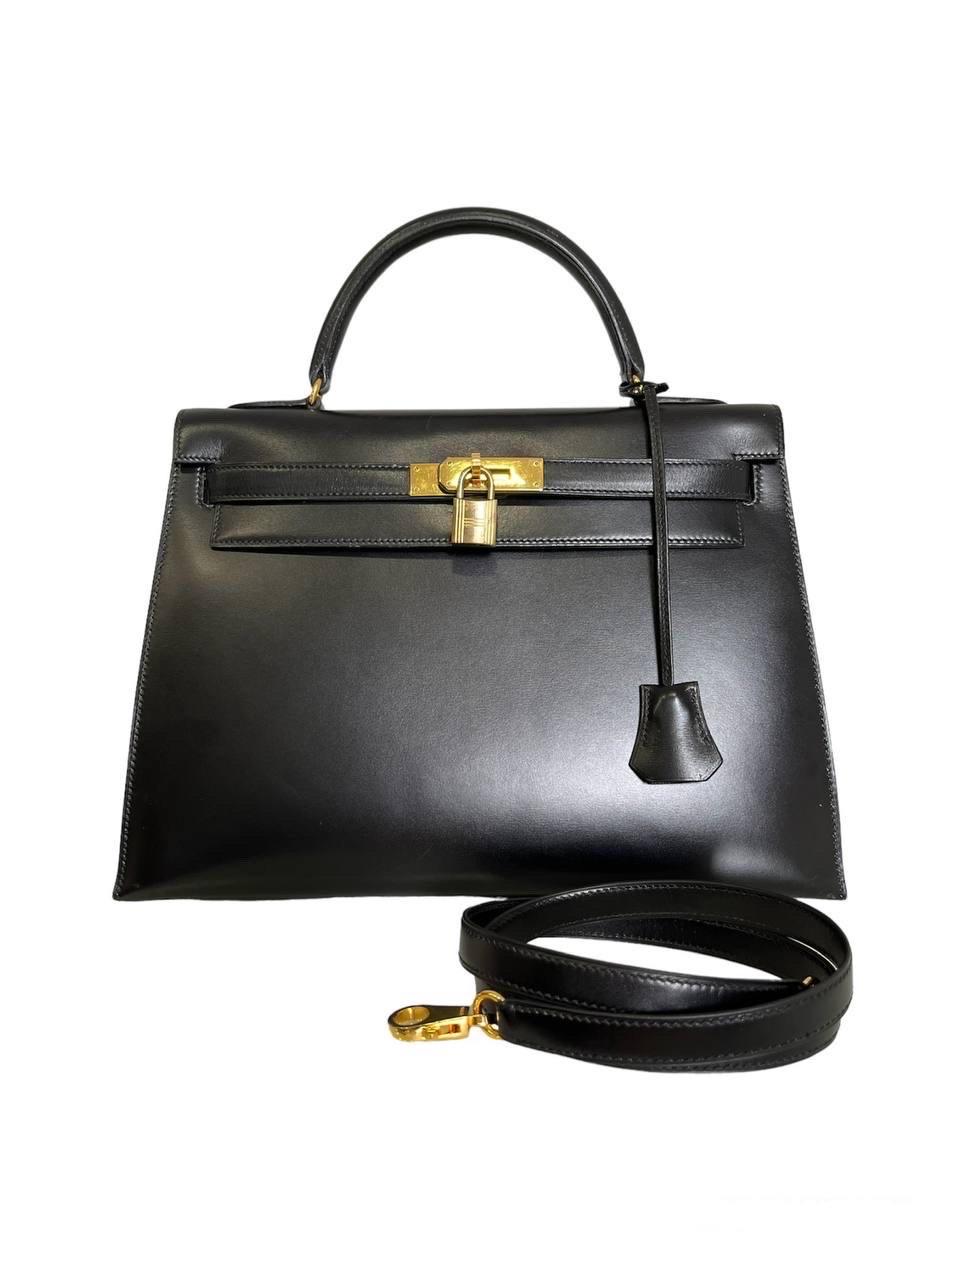 1991 Hermès Kelly 32 Box Calf Noir Top Handle Bag 7